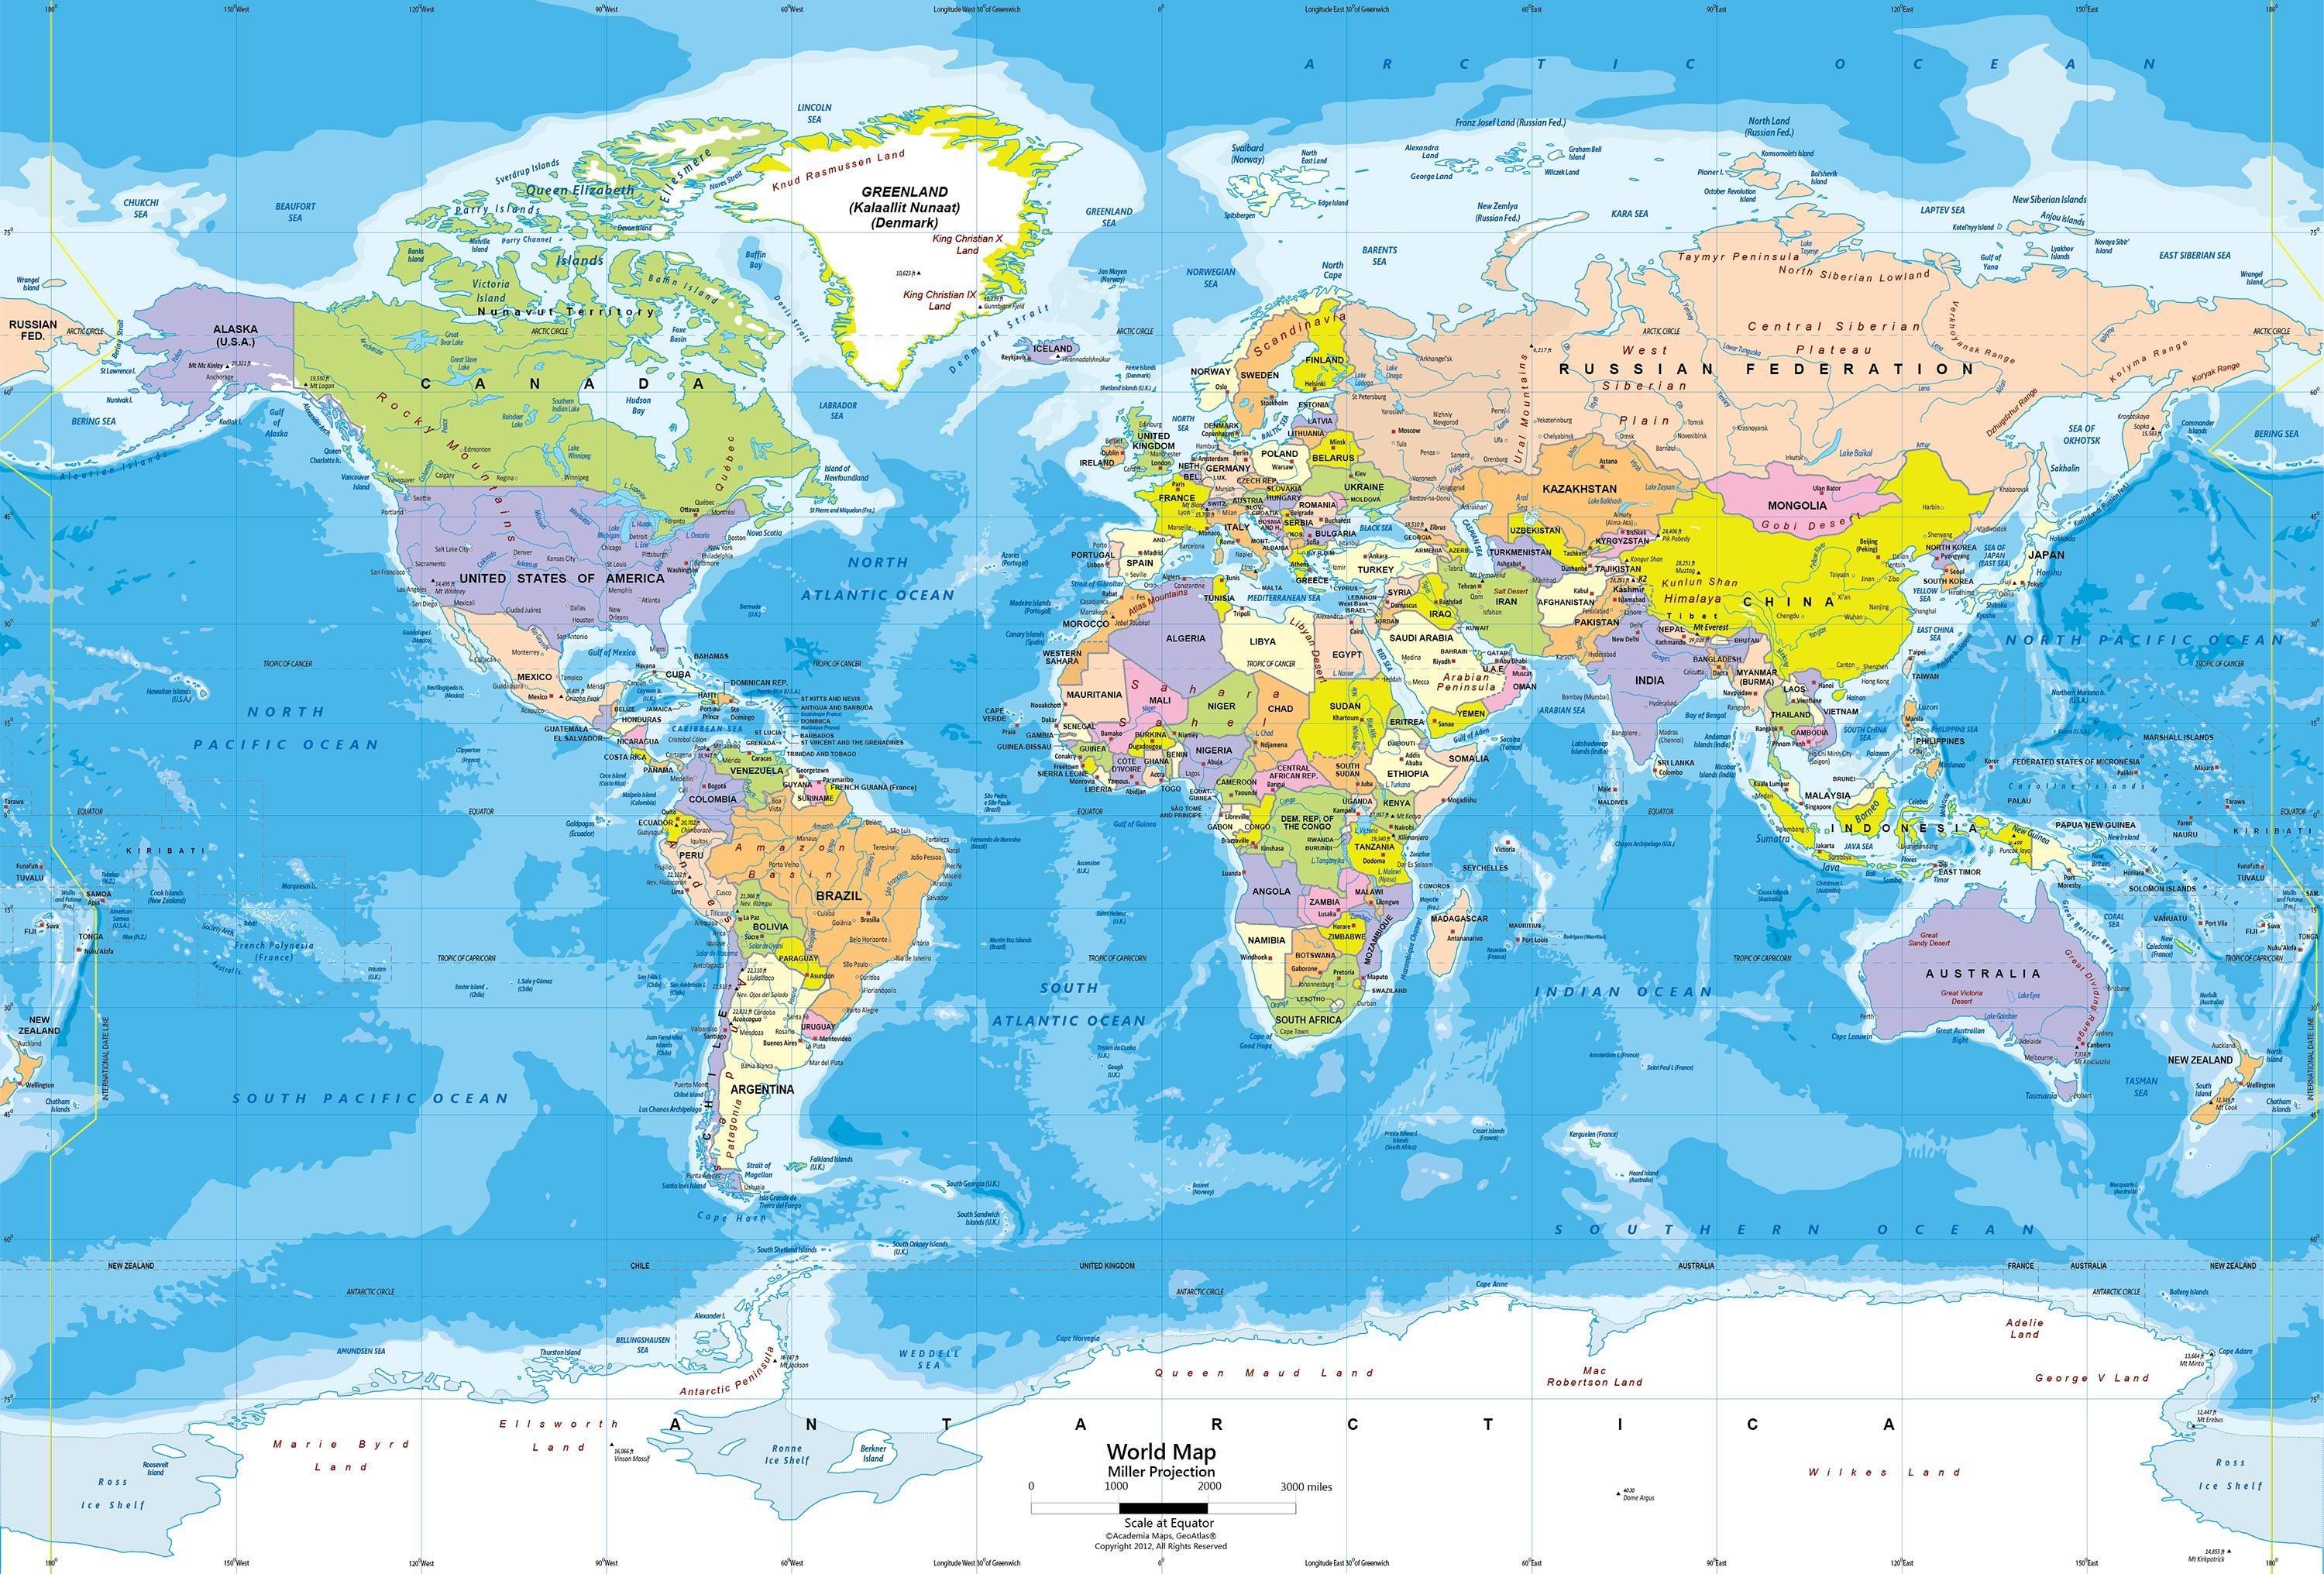 Worldmapsonline.com world maps